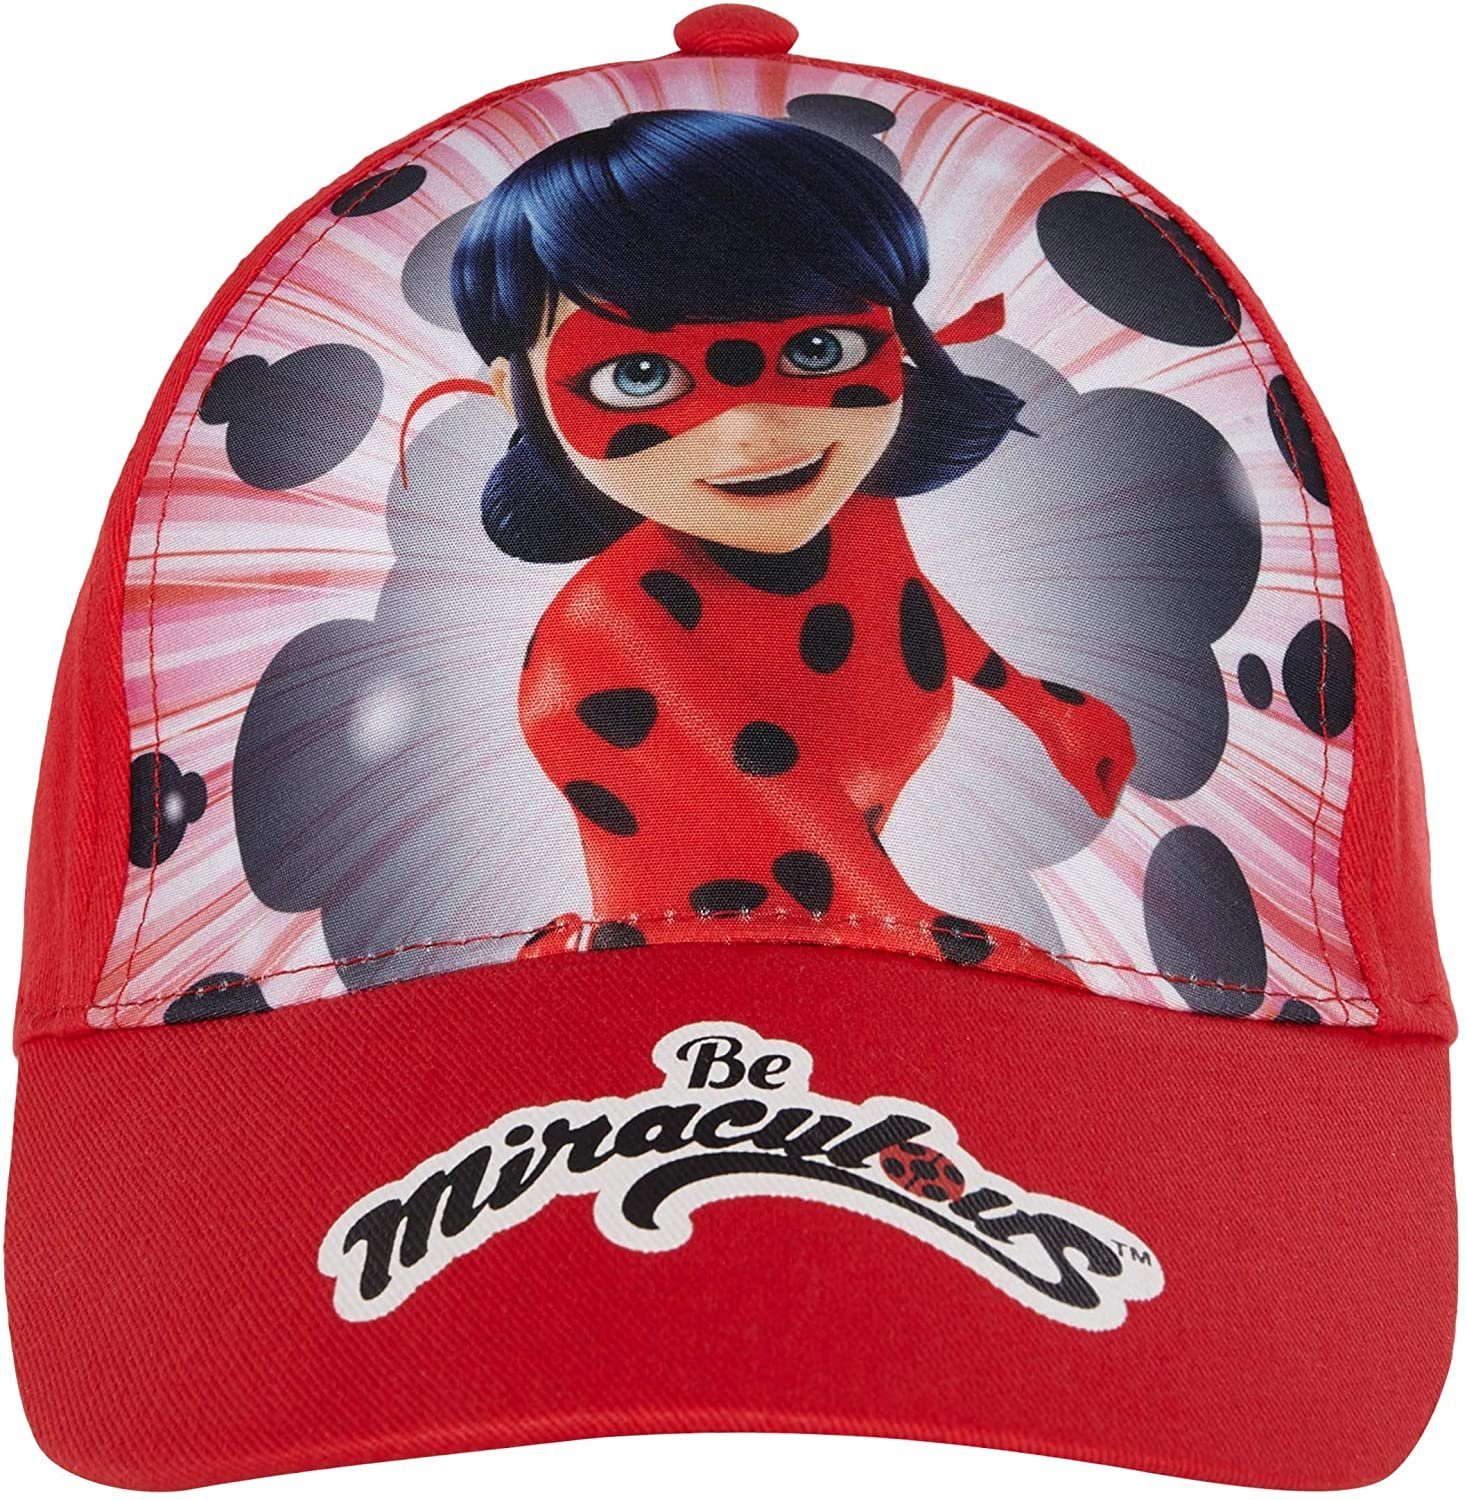 Kinder Mädchen Ladybug Miraculous Gr.52 + Rot Miraculous 54 Mütze - Schule Baseball Sonnenschutz Schirmmütze Kita Cap Ladybug Schirmmütze